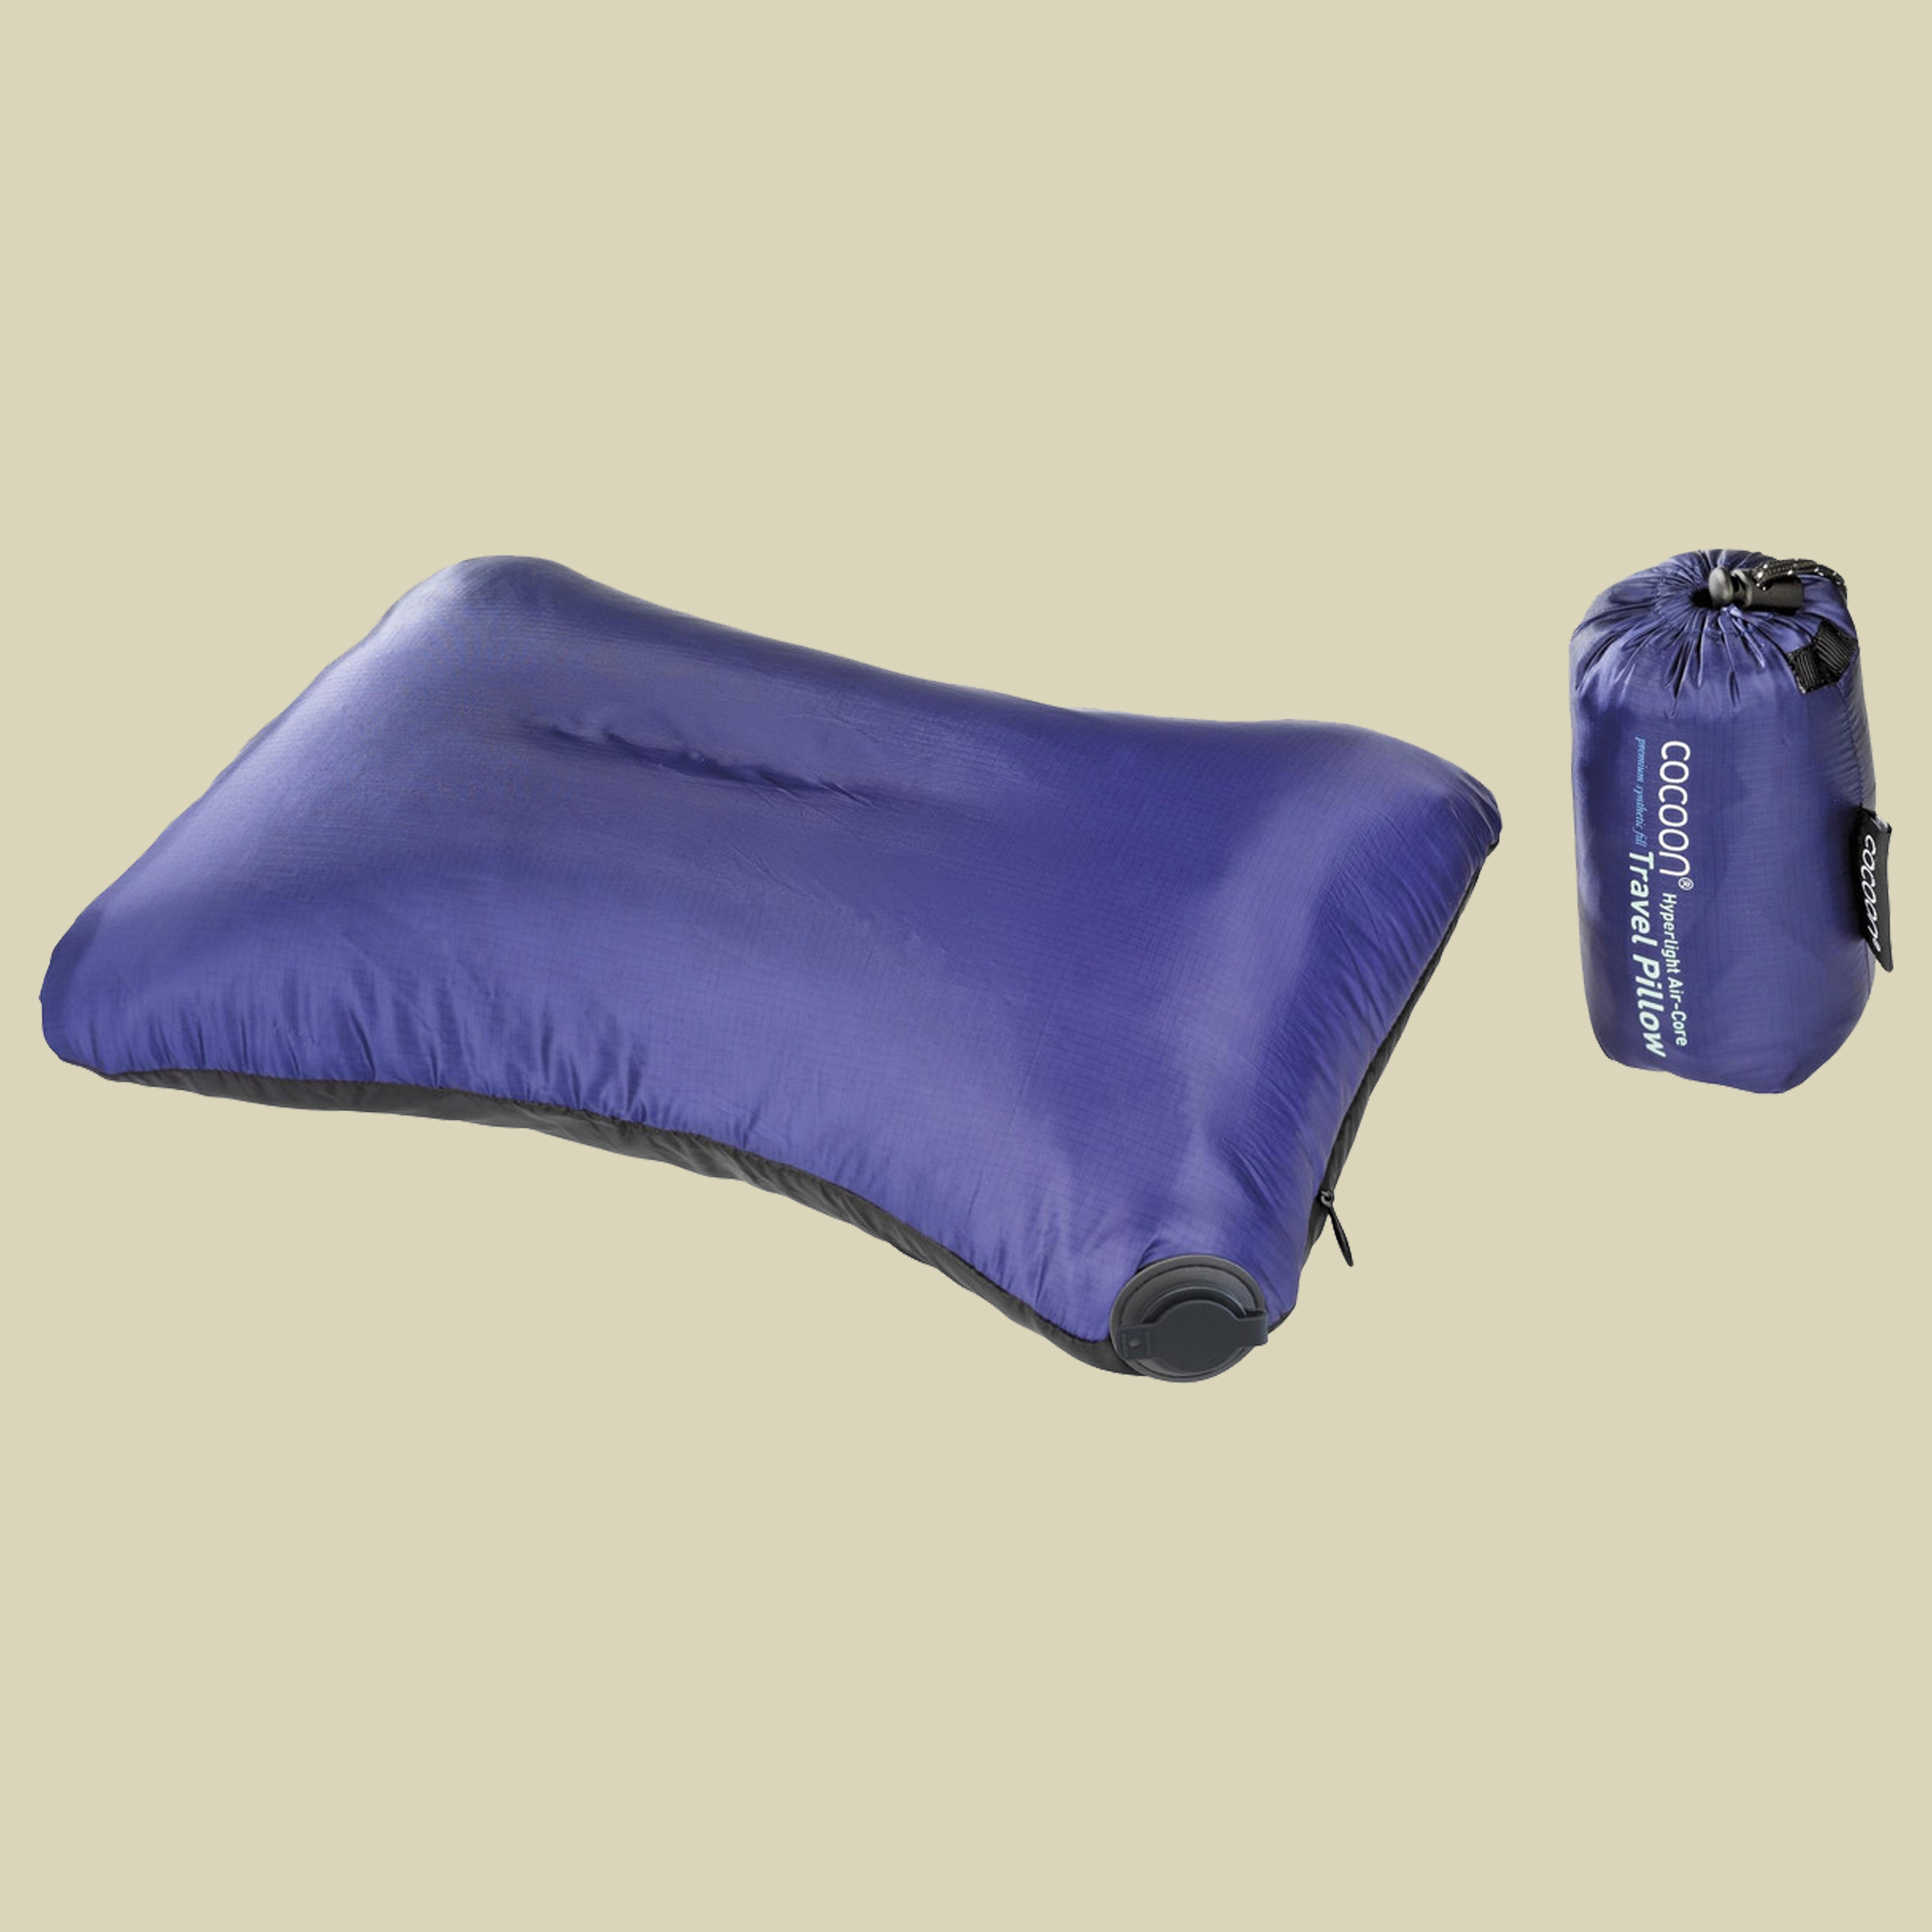 Air-Core Pillow Microlight